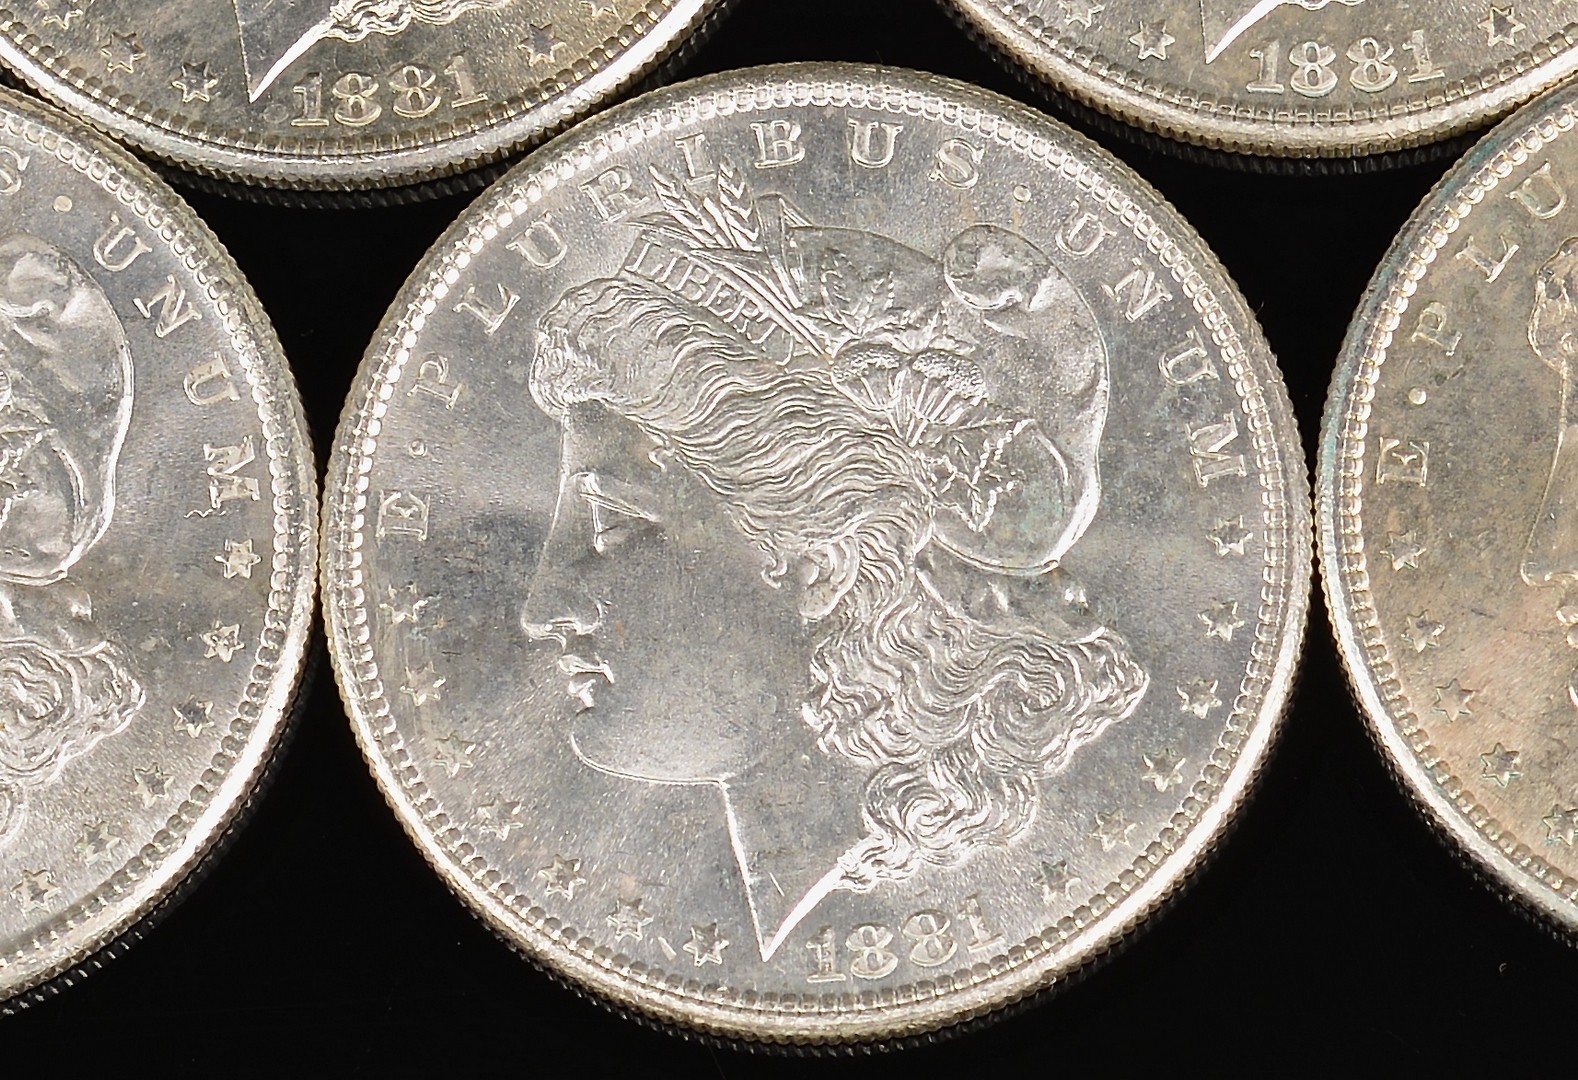 Lot 964: 16 Uncirculated 1881 Morgan Silver Dollars